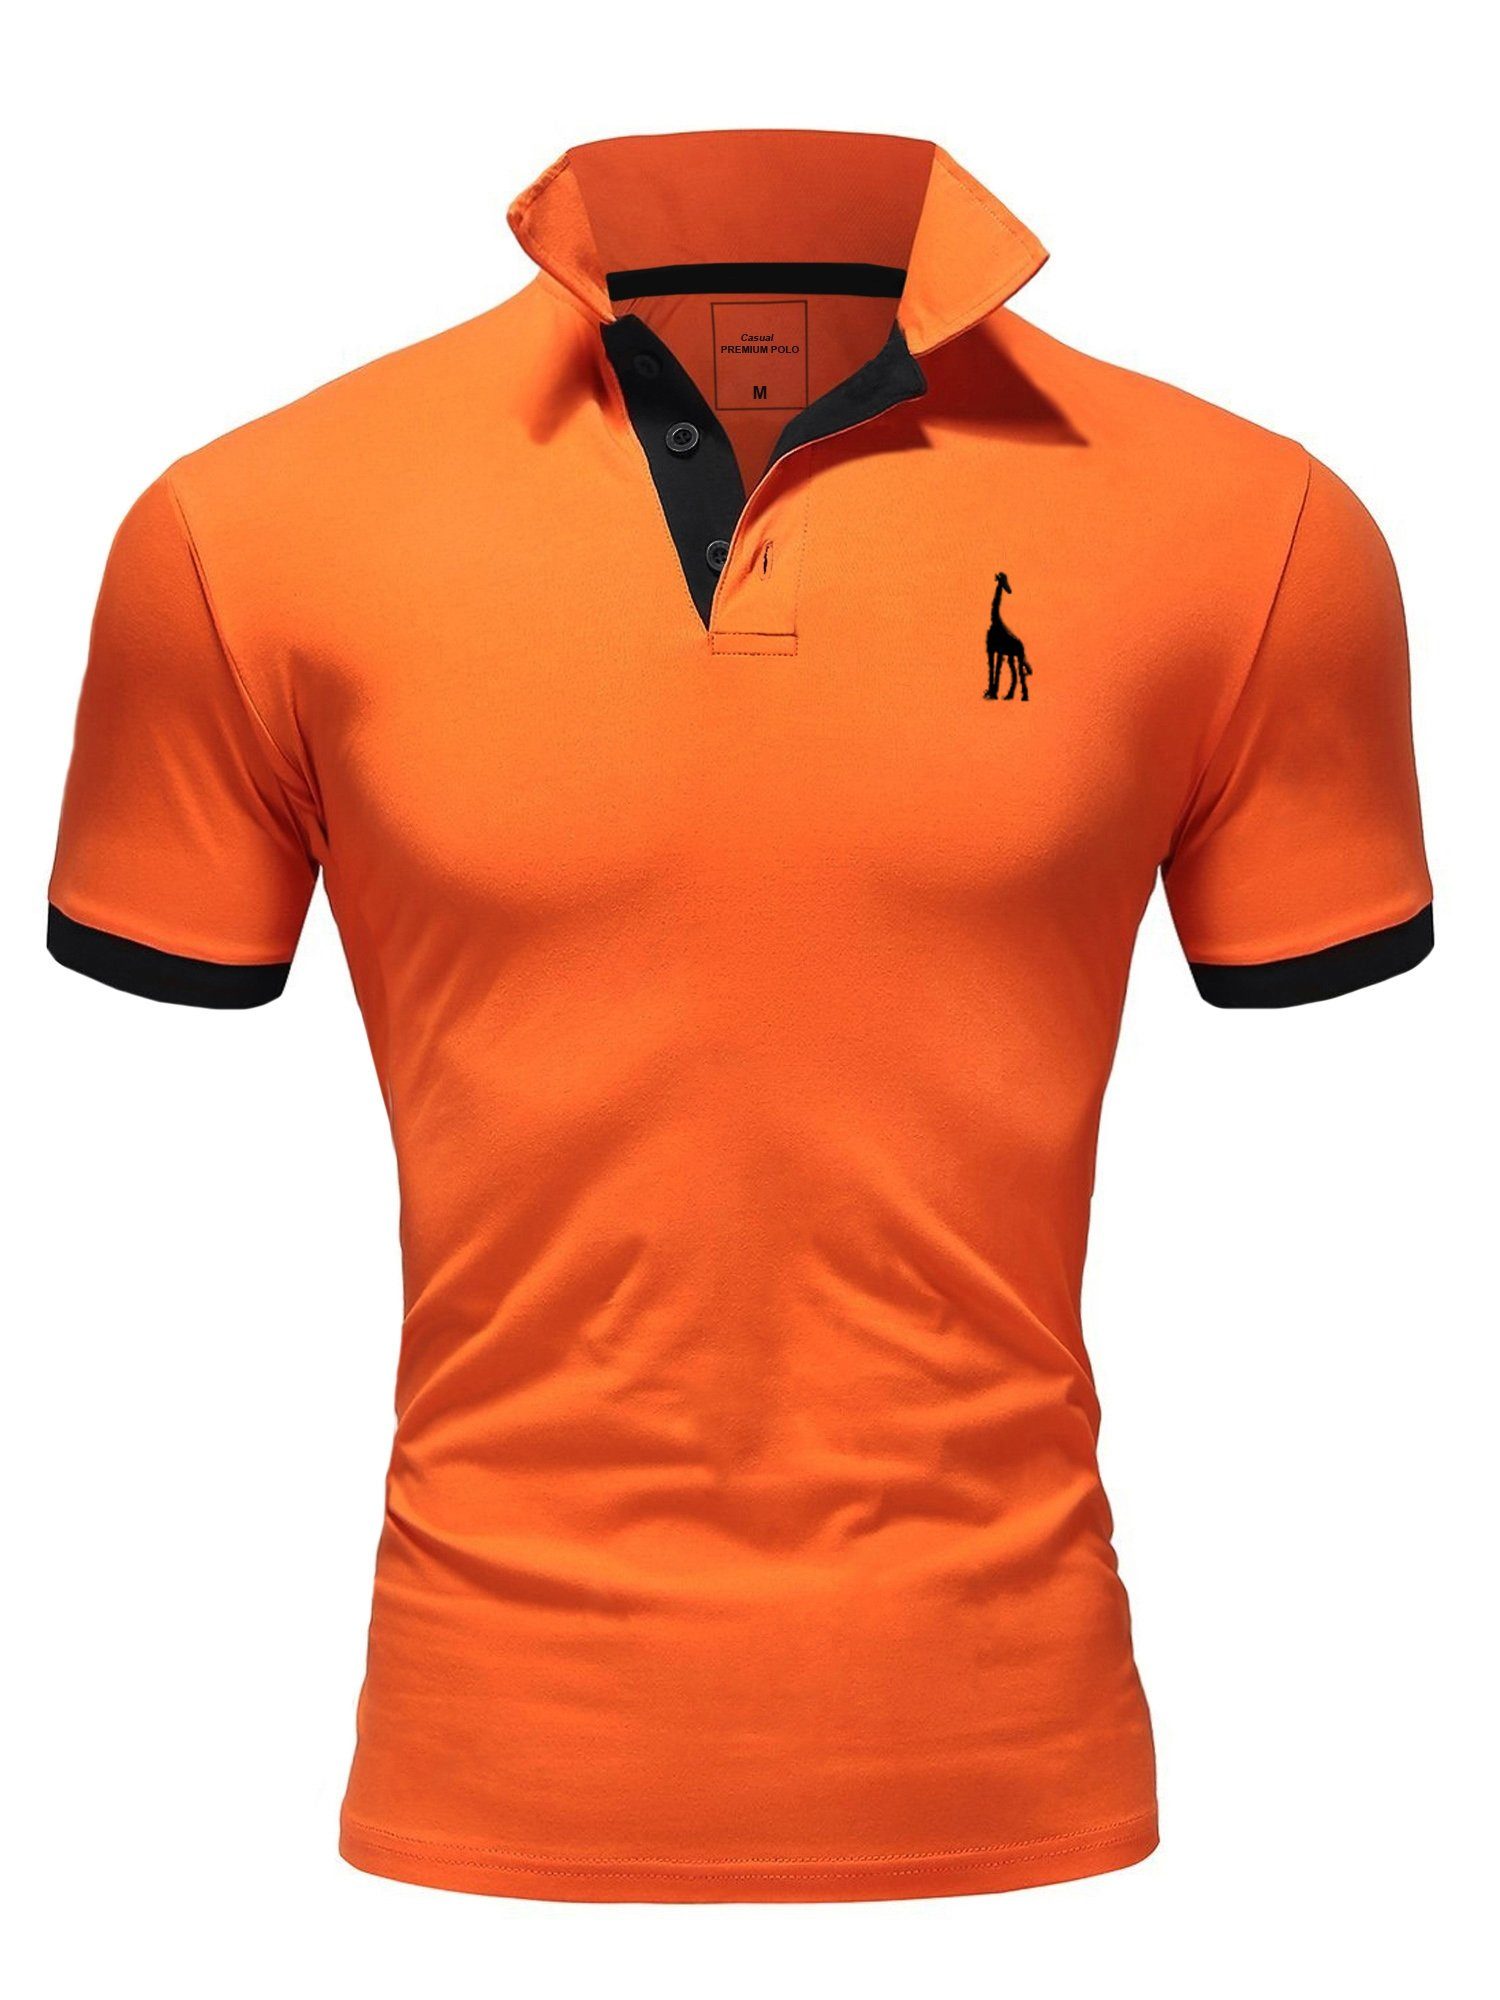 JOSEPH Herren Polo Kurzarm Basic Kontrast REPUBLIX Poloshirt Hemd Orange/Schwarz